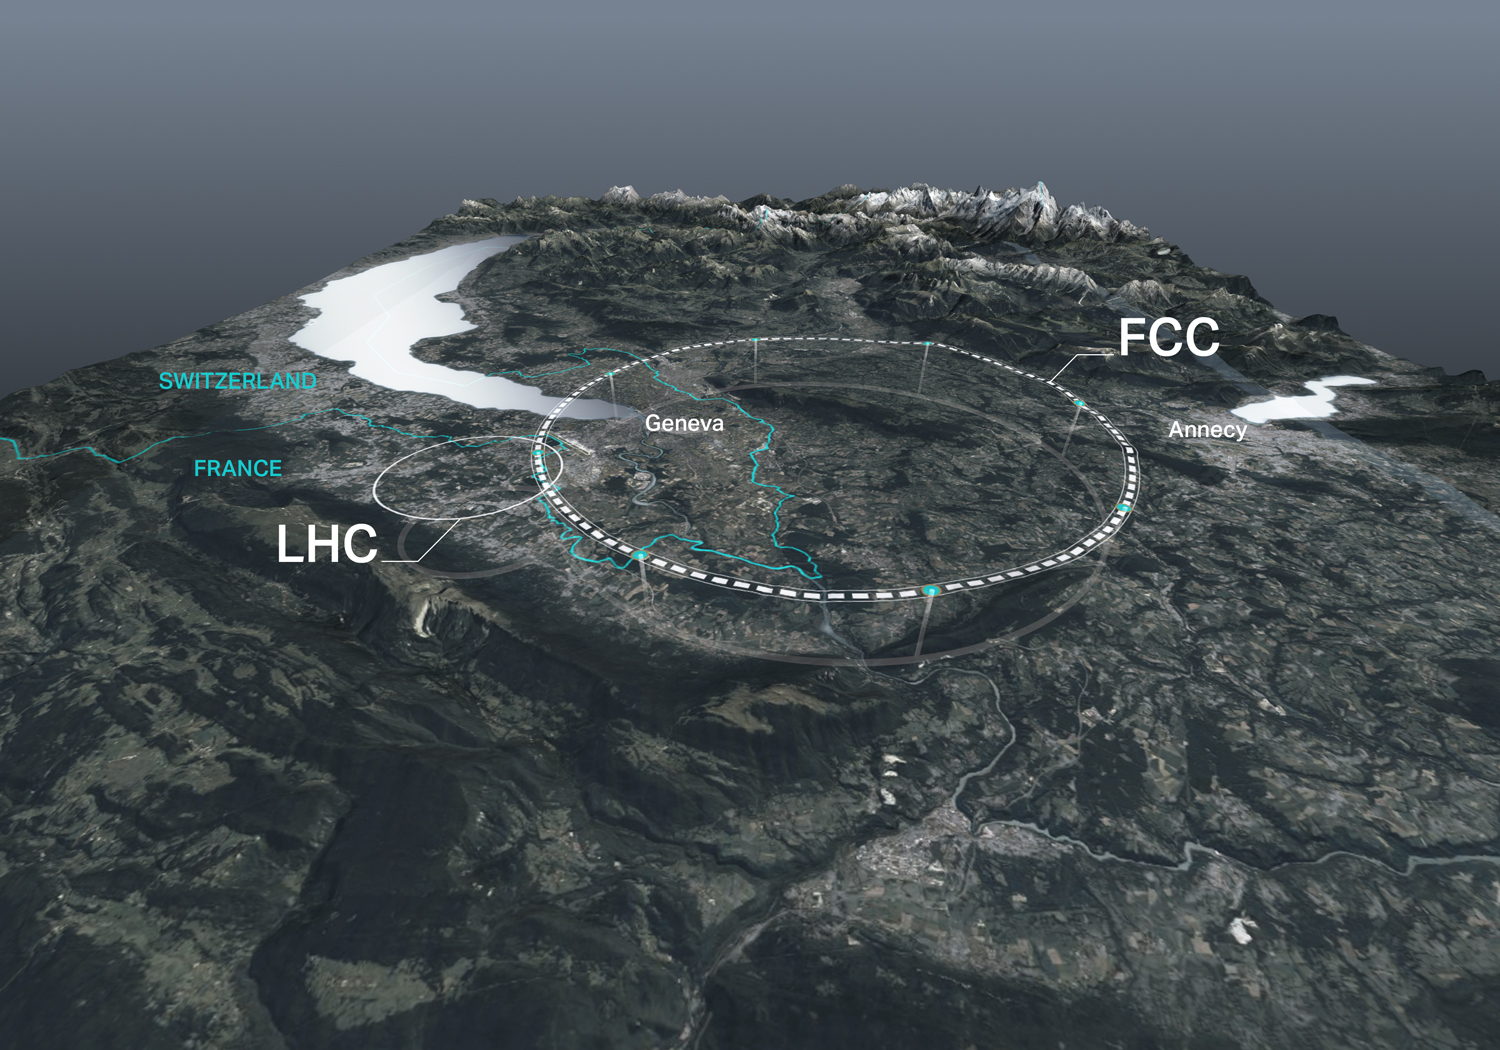 CERN graphic comparing FCC with LHC collider.